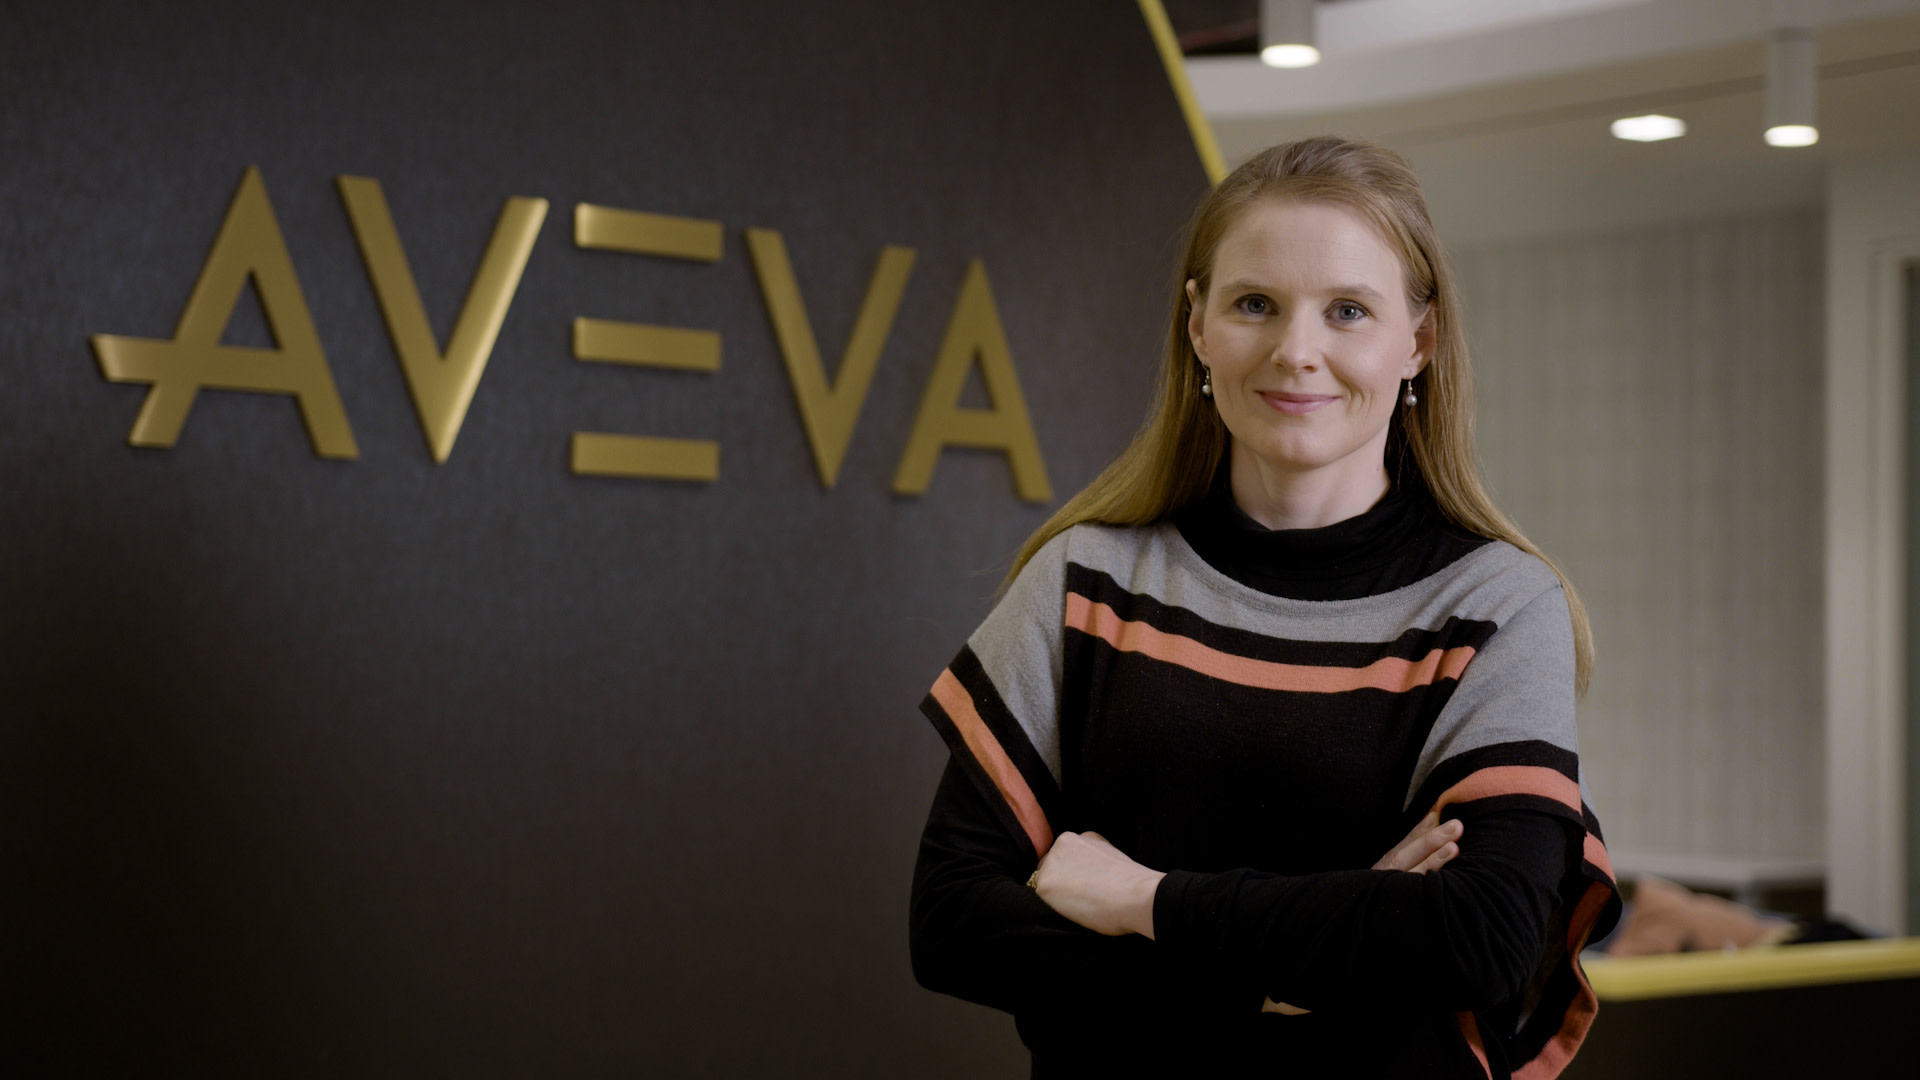 AVEVA Software Helps Customers Go Net Zero